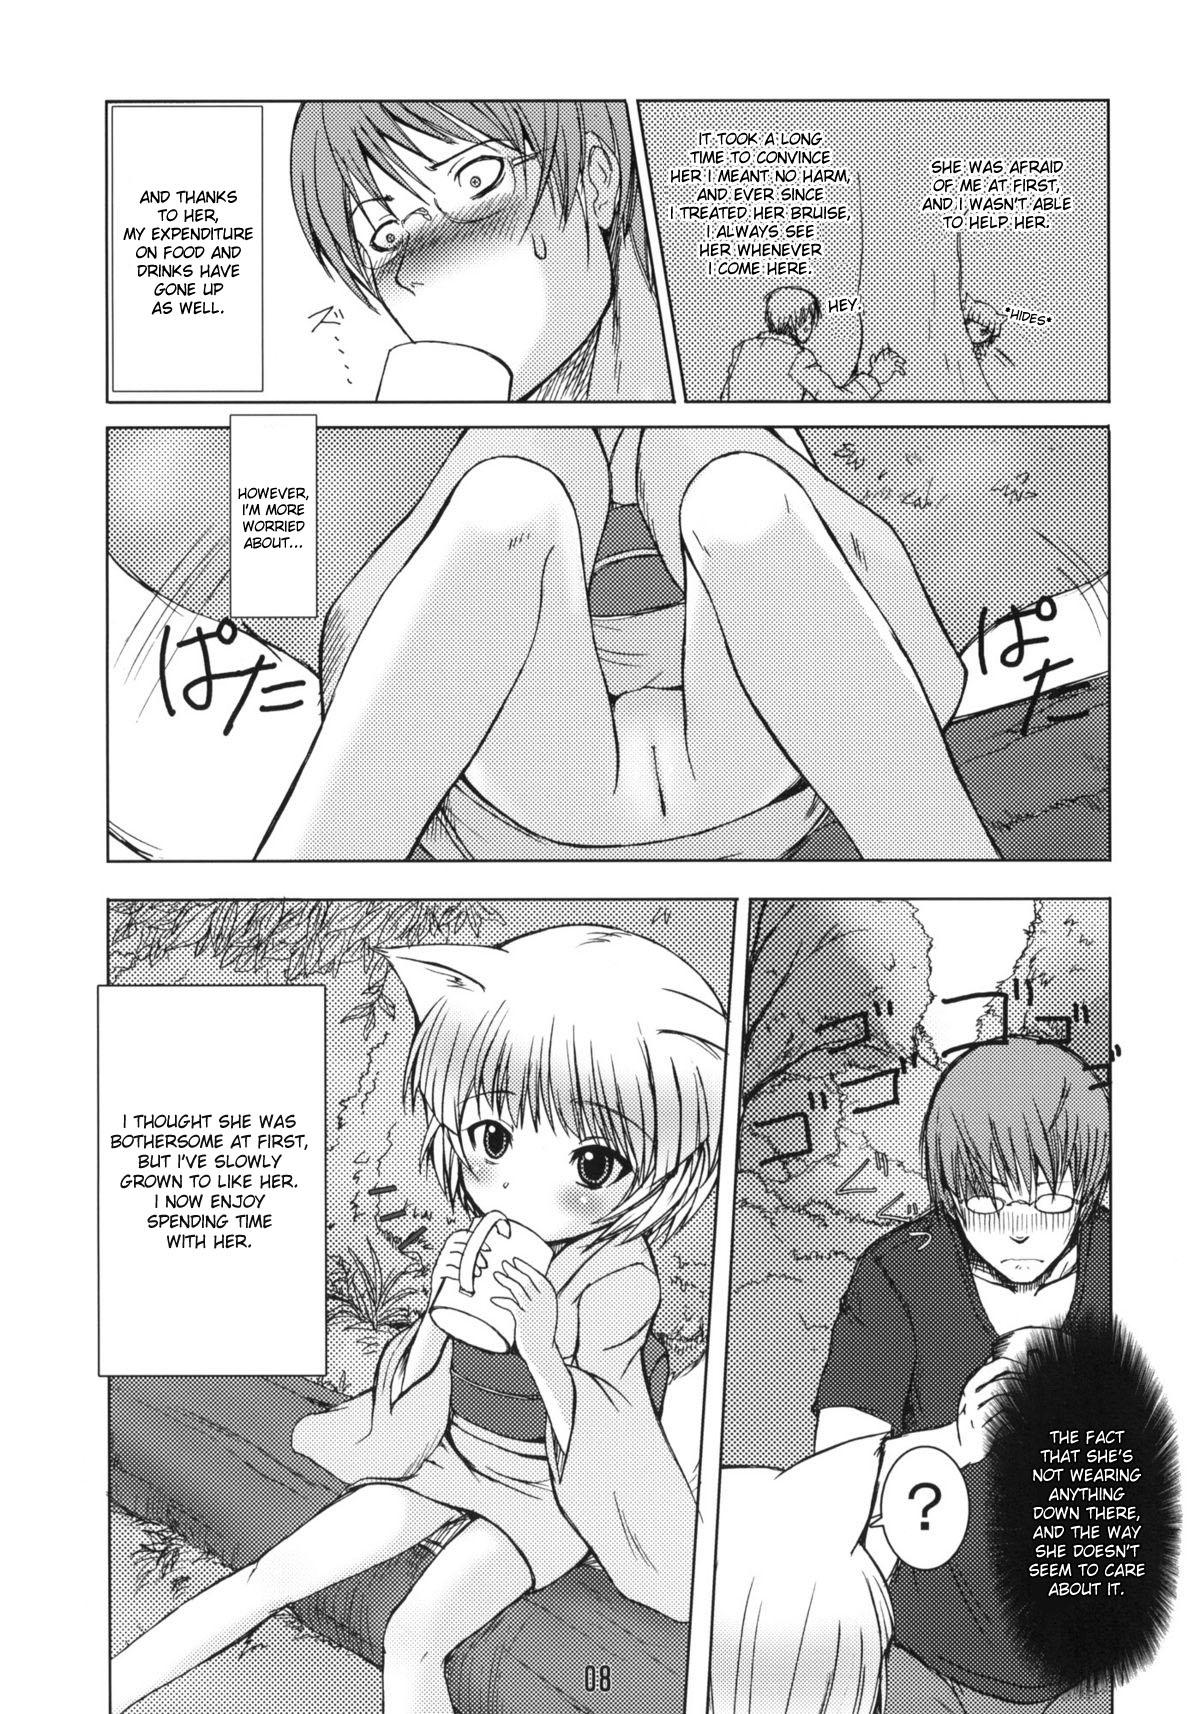 Transex Byakko no Mori Safadinha - Page 7